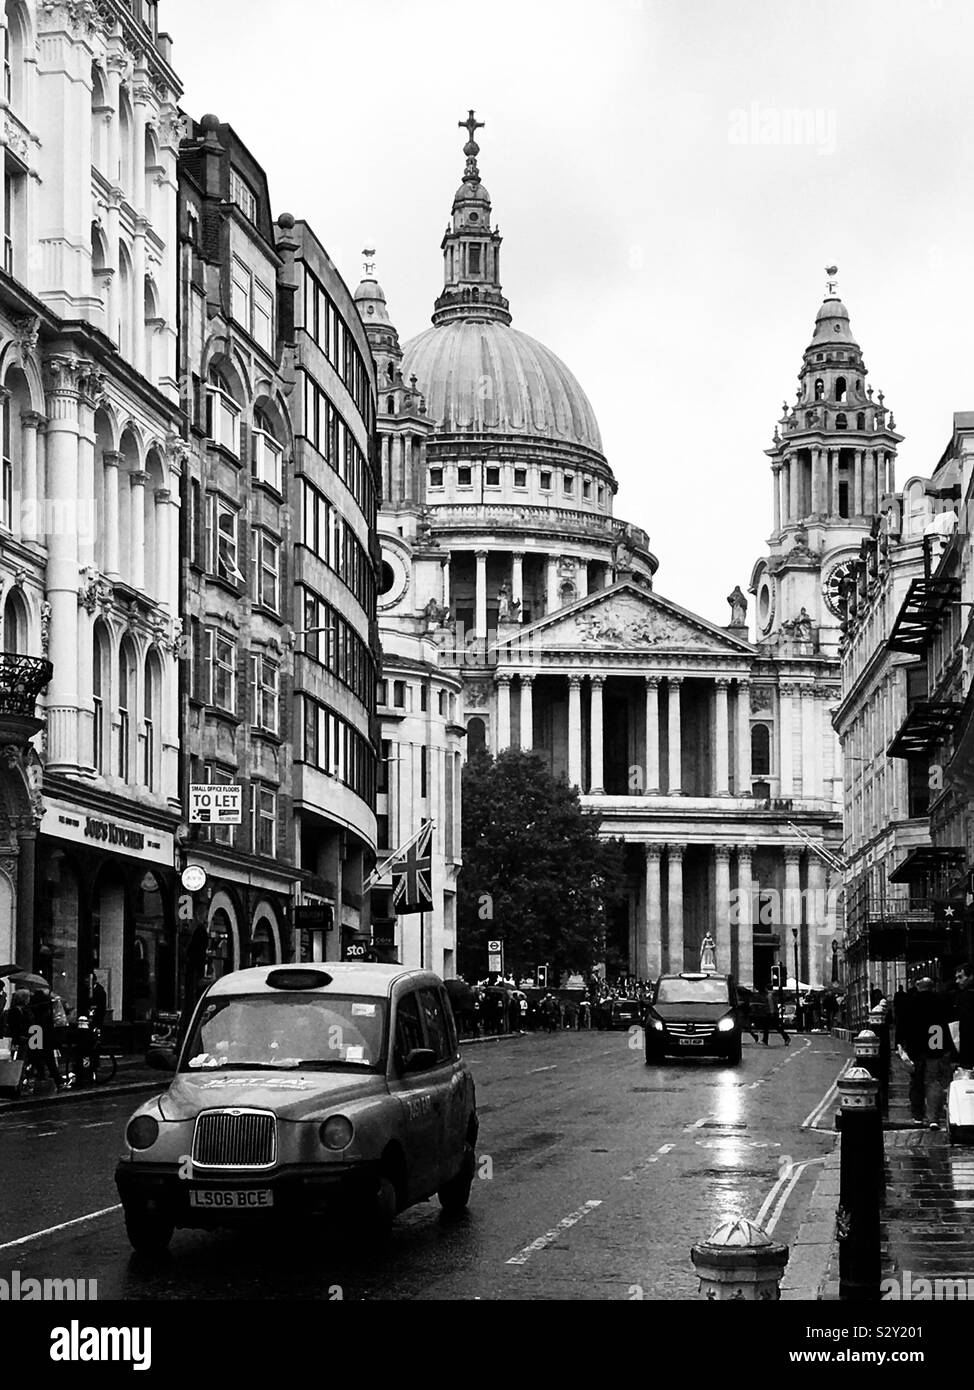 St Pauls Cathedral, London Taxis im Vordergrund. Stockfoto